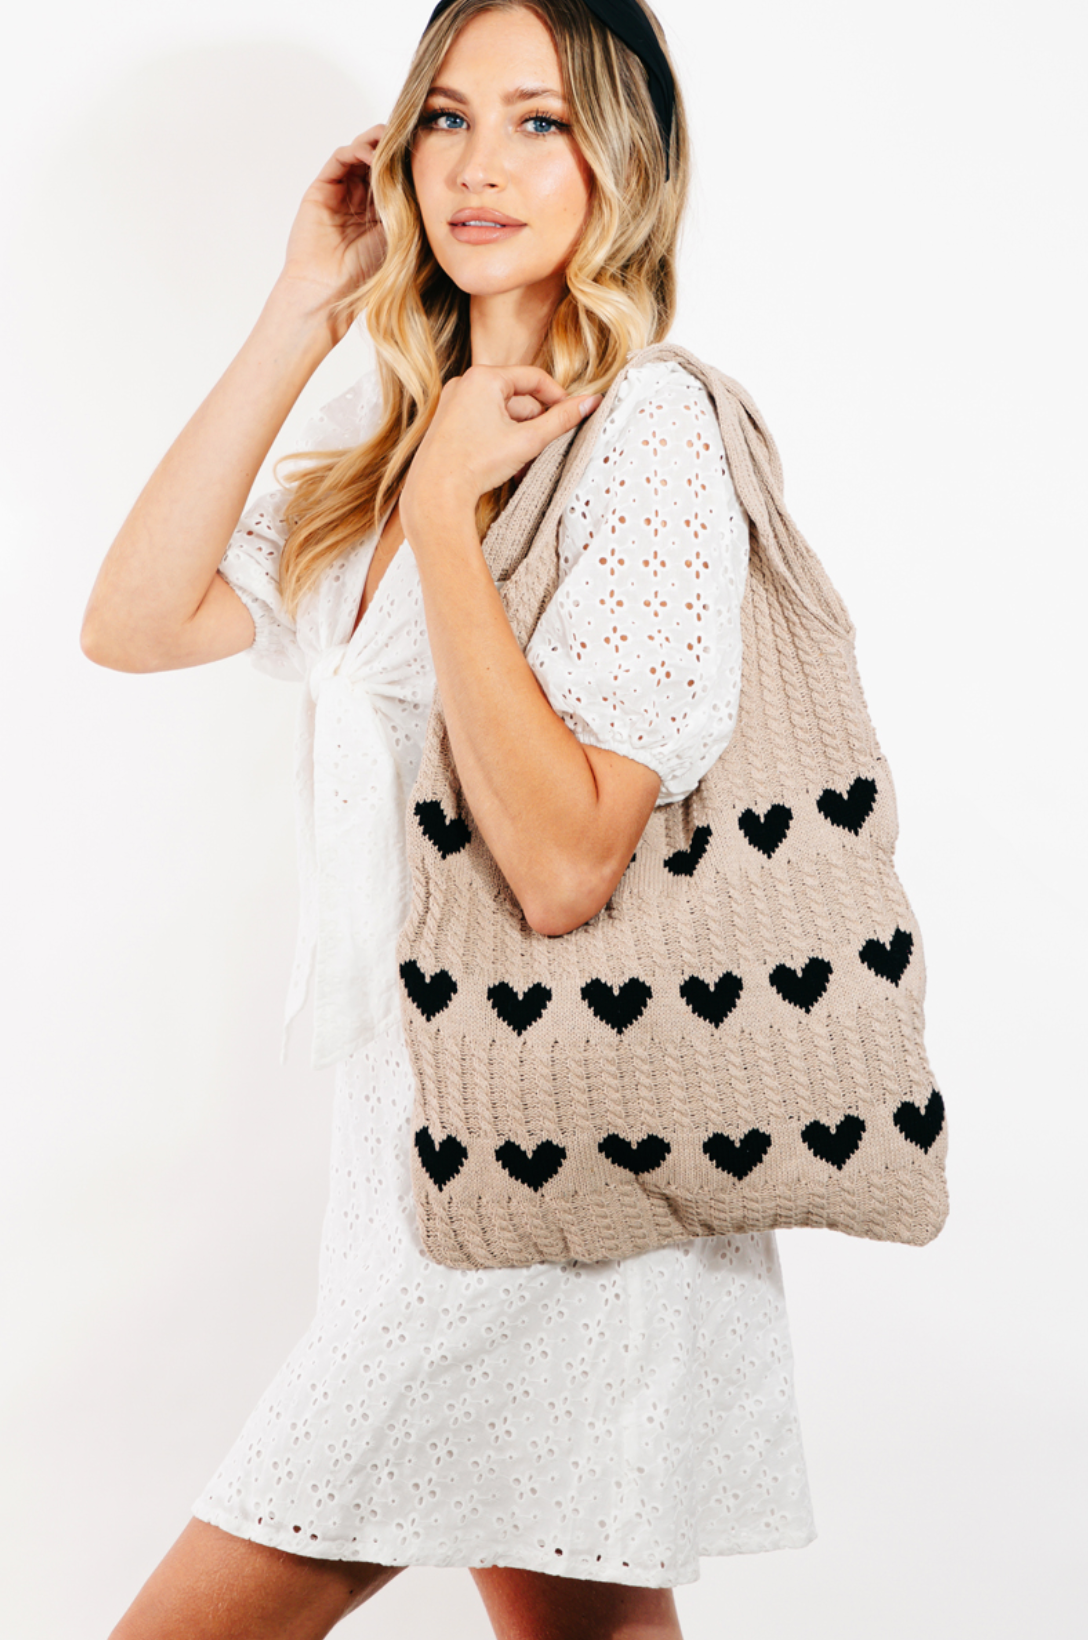 Crochet Knit Hearts Tote Bag